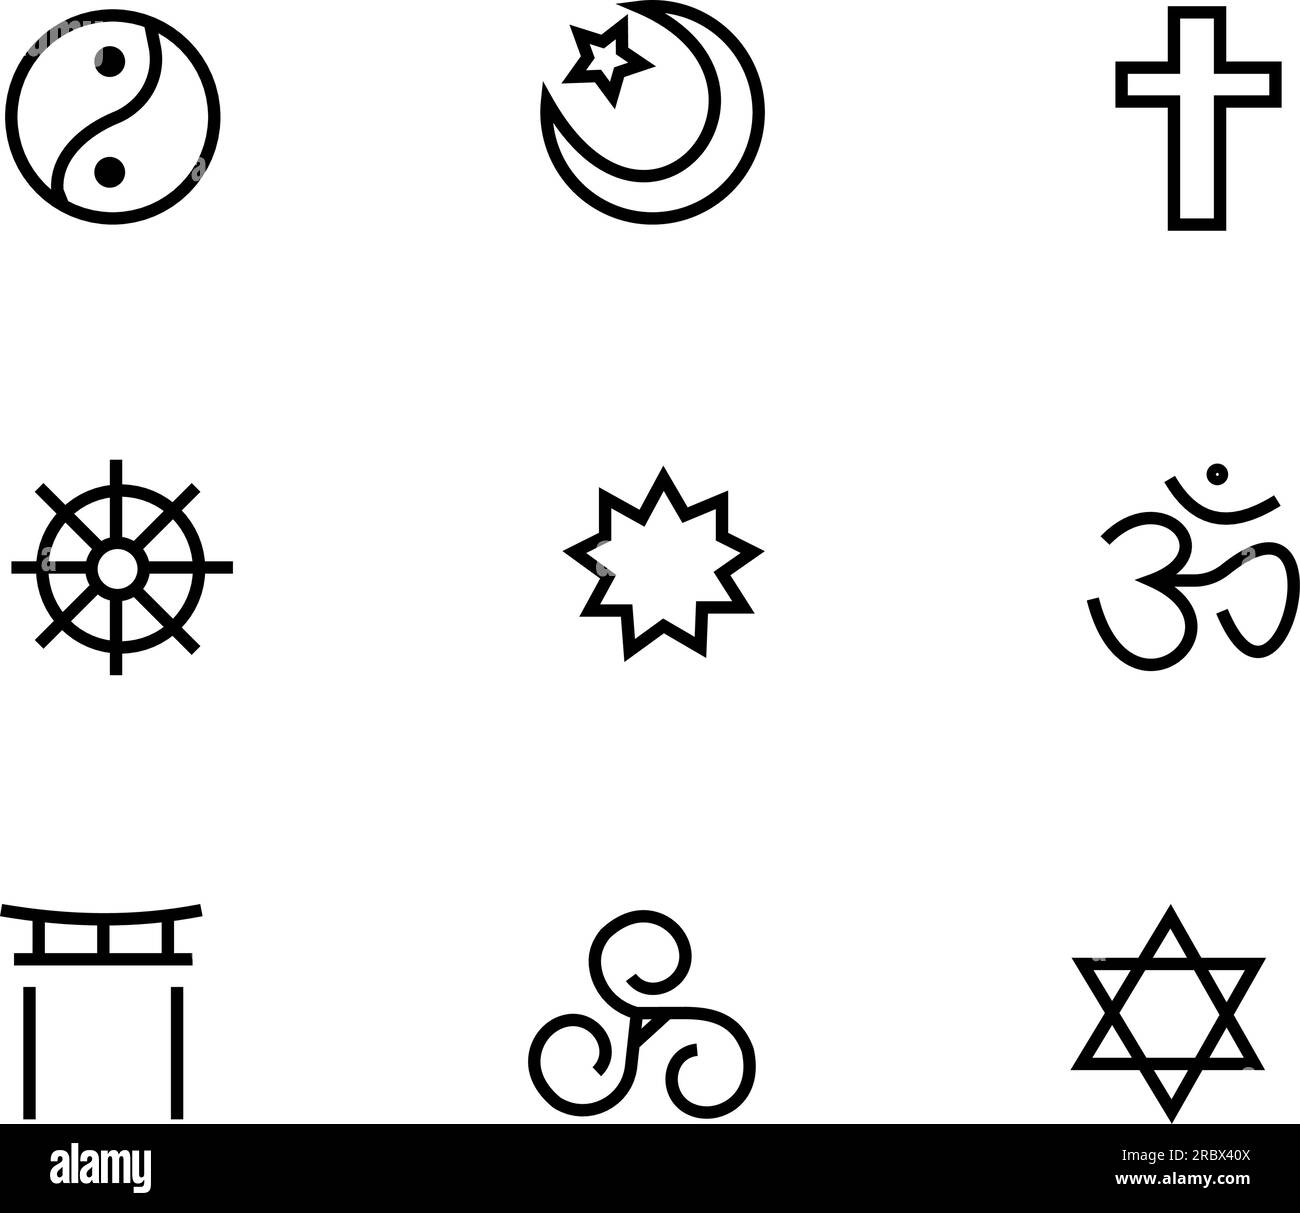 World religion symbols. Christianity, Islam, Hinduism, Buddhism, Judaism, Taoism, Shintoism, Bahaism and Druidism icon vector illustration. Stock Vector